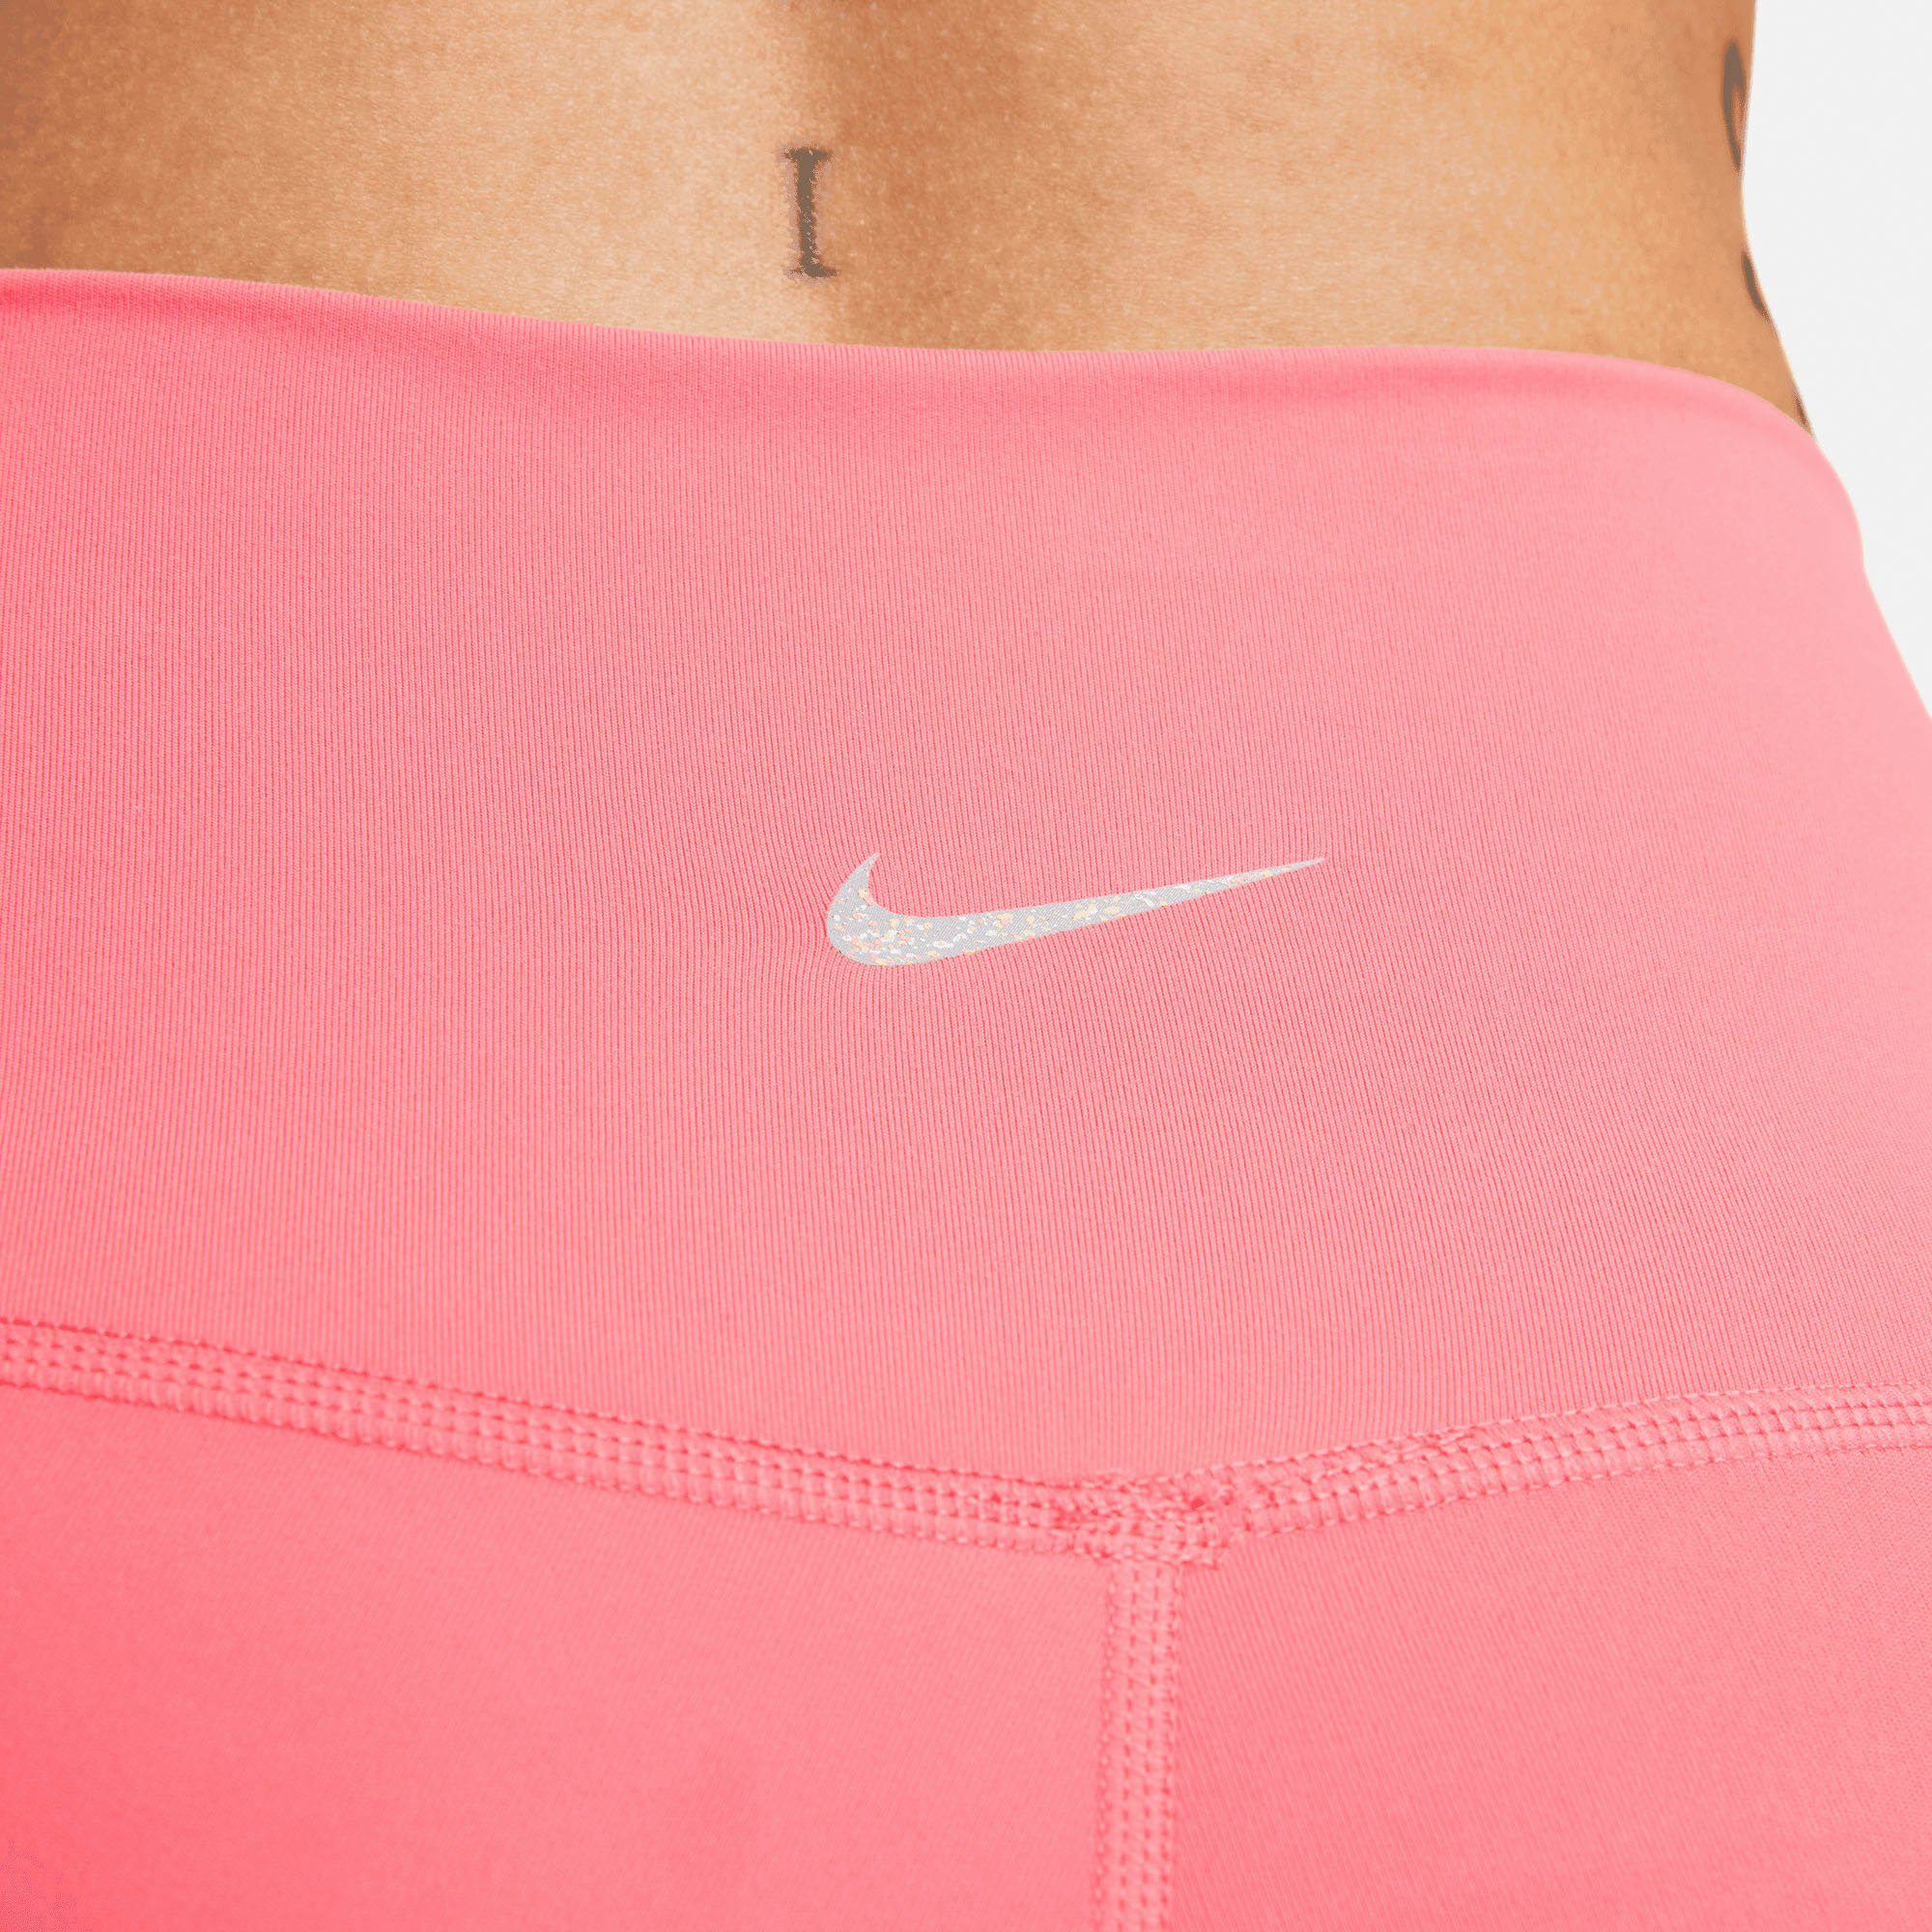 Nike Trainingstights Yoga Leggings orange Women's High-Waisted Dri-FIT 